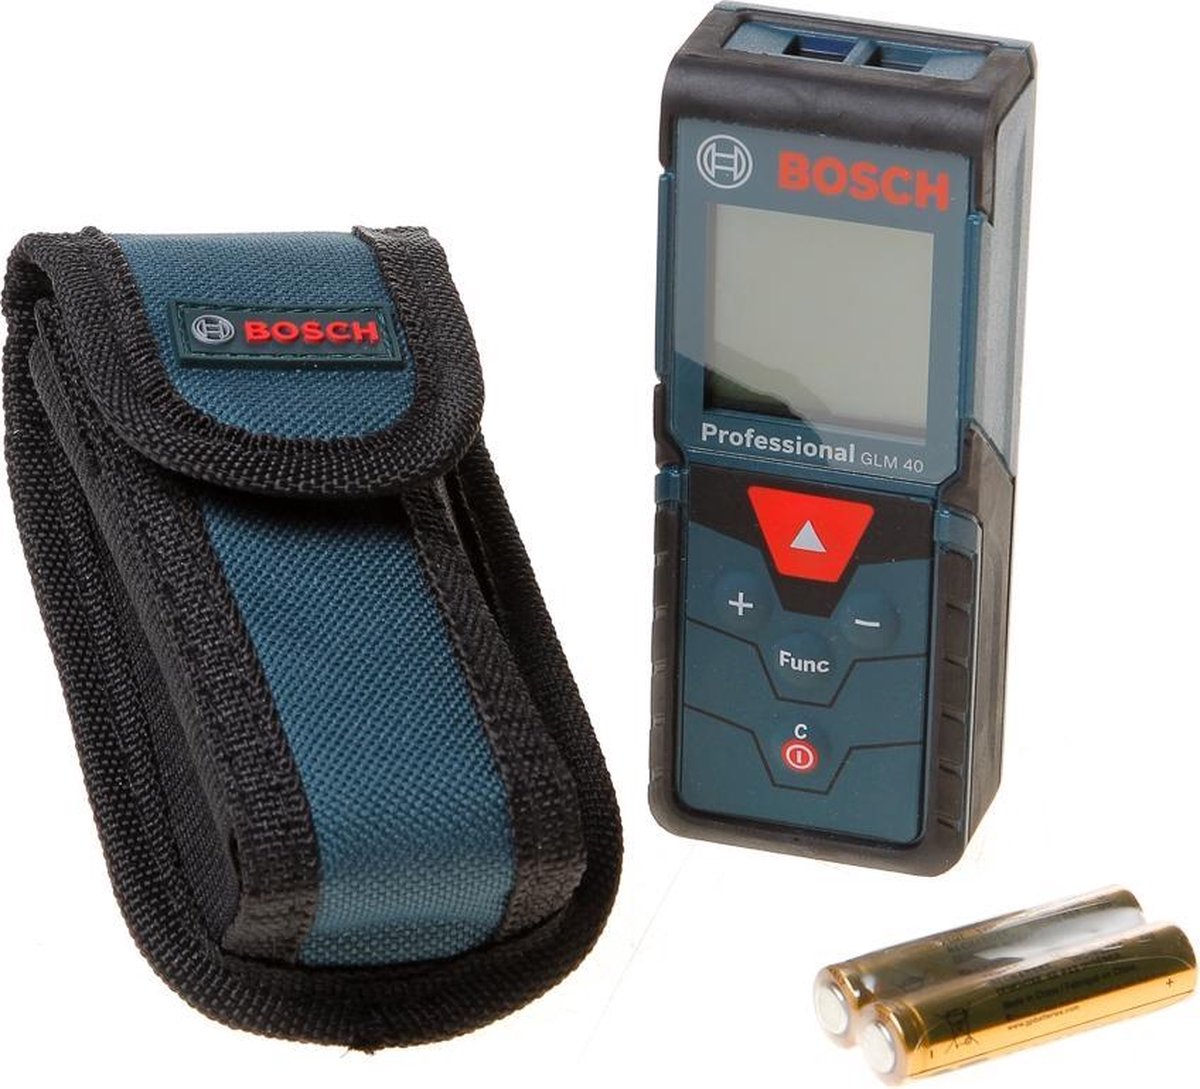 Bosch Professional GLM 40 Afstandmeter Tot meter | bol.com